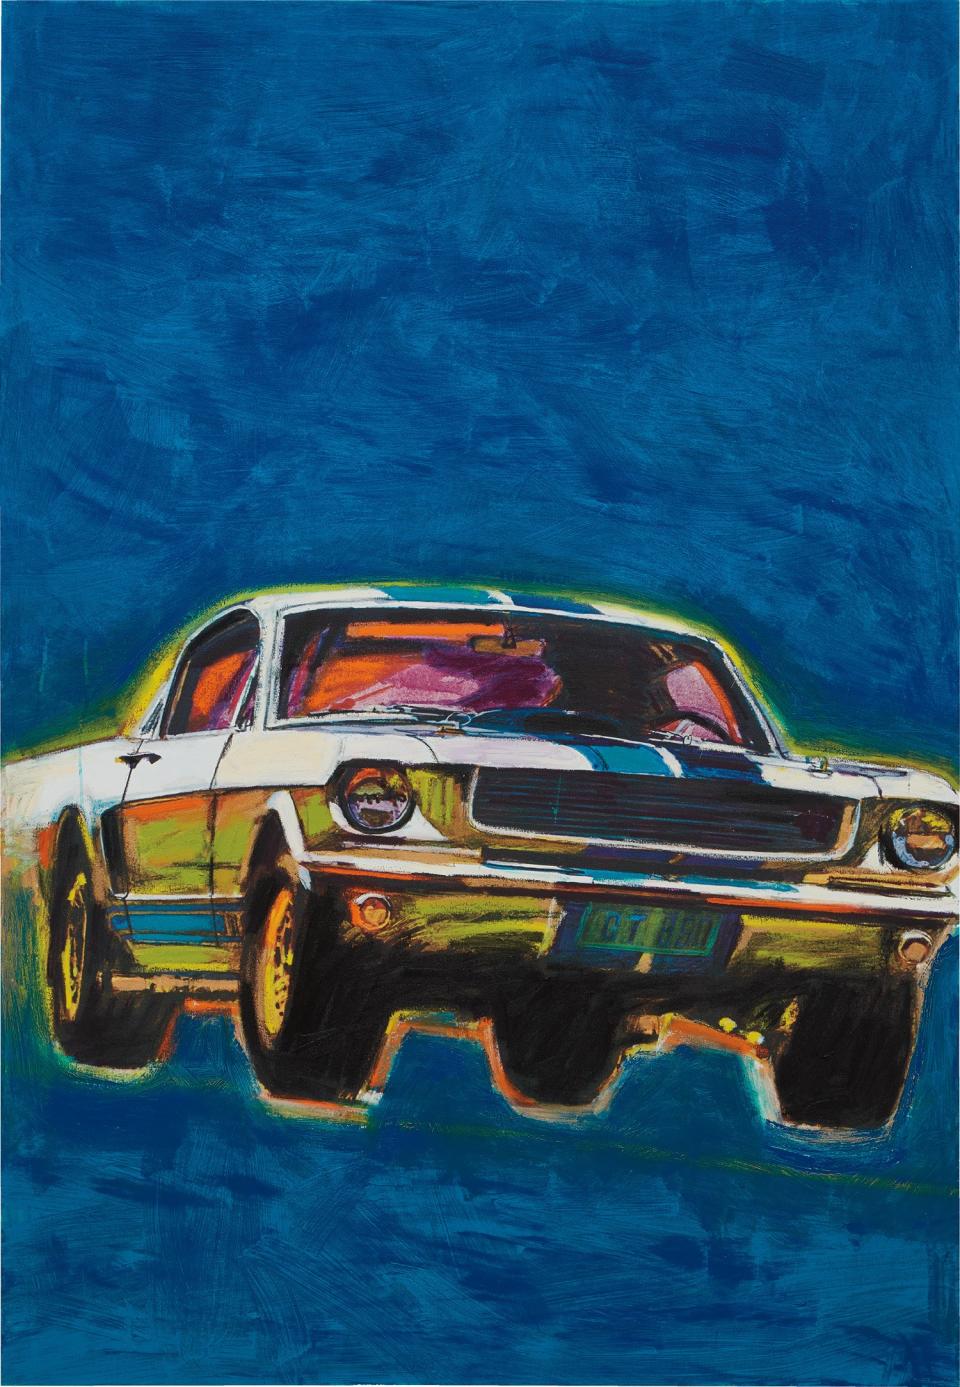 Richard Prince, Mustang Painting, 2014–16